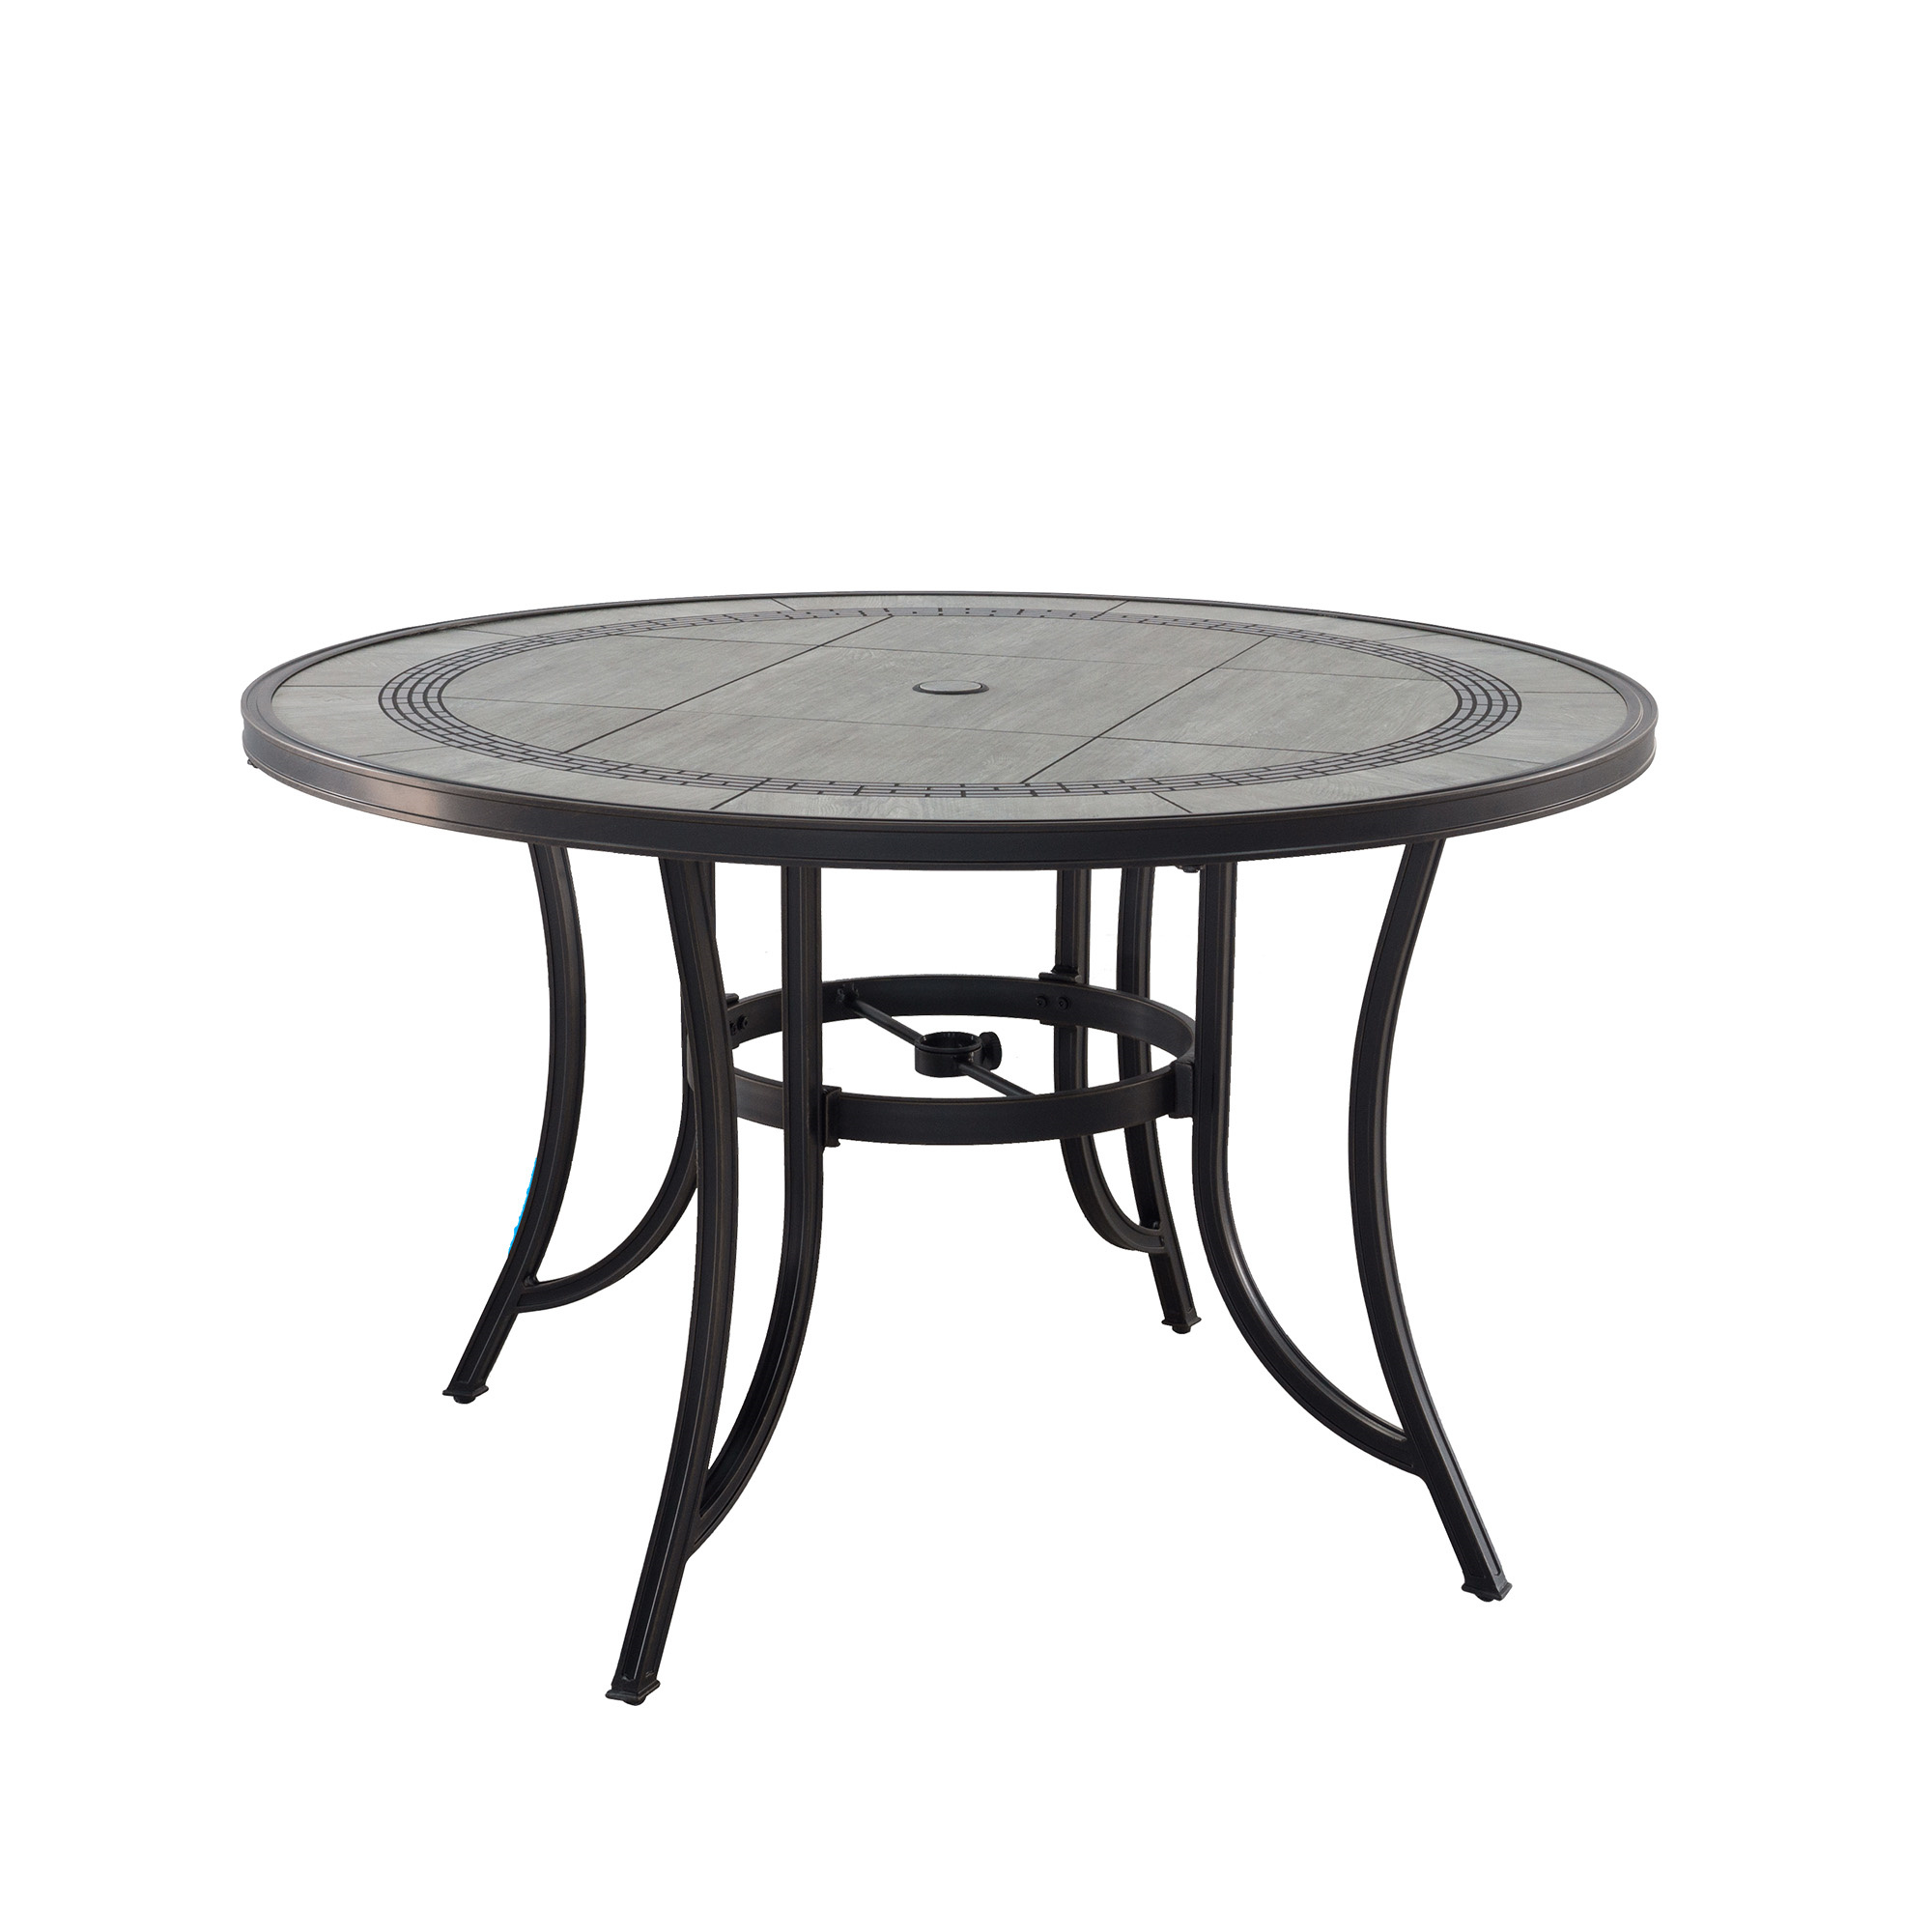 48 inch W Aluminum Ceramic Tile Top Round Dining Table with Umbrella Hole